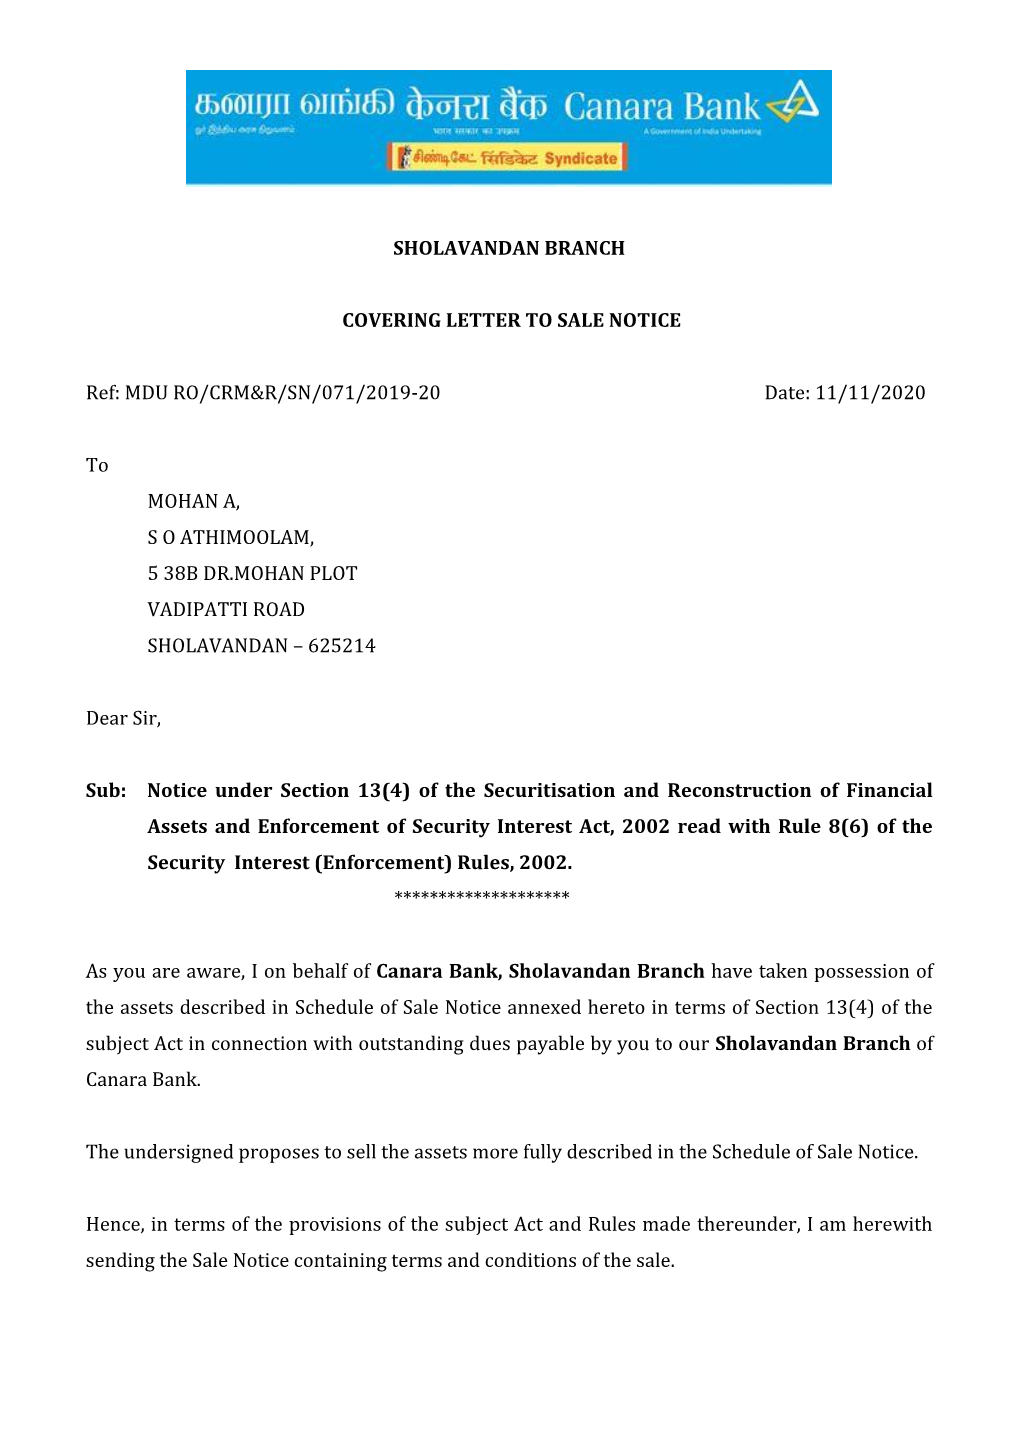 Sholavandan Branch Covering Letter to Sale